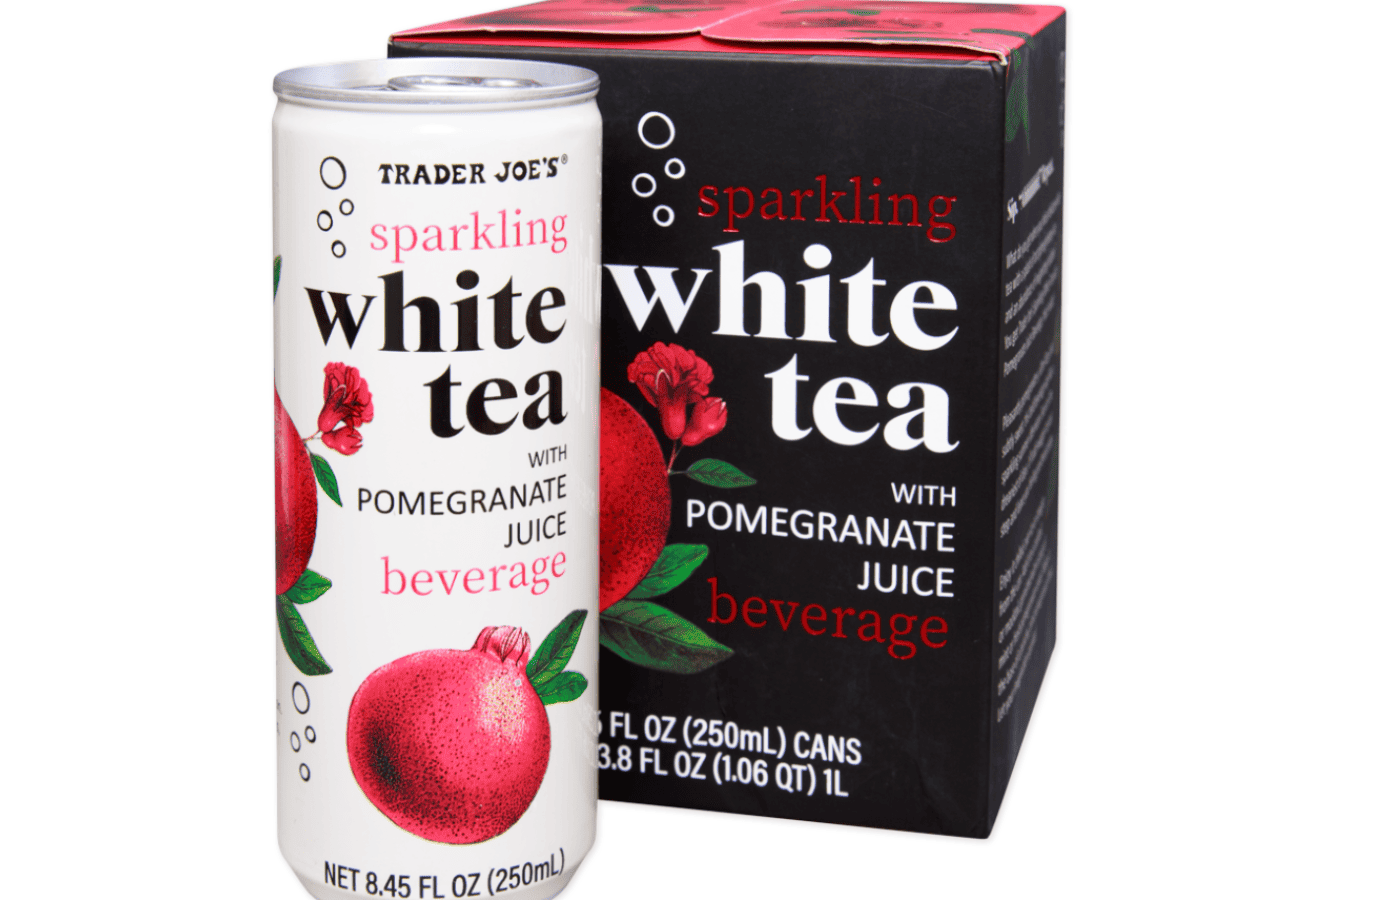 Does Trader Joe's Sparkling White Tea Have Caffeine